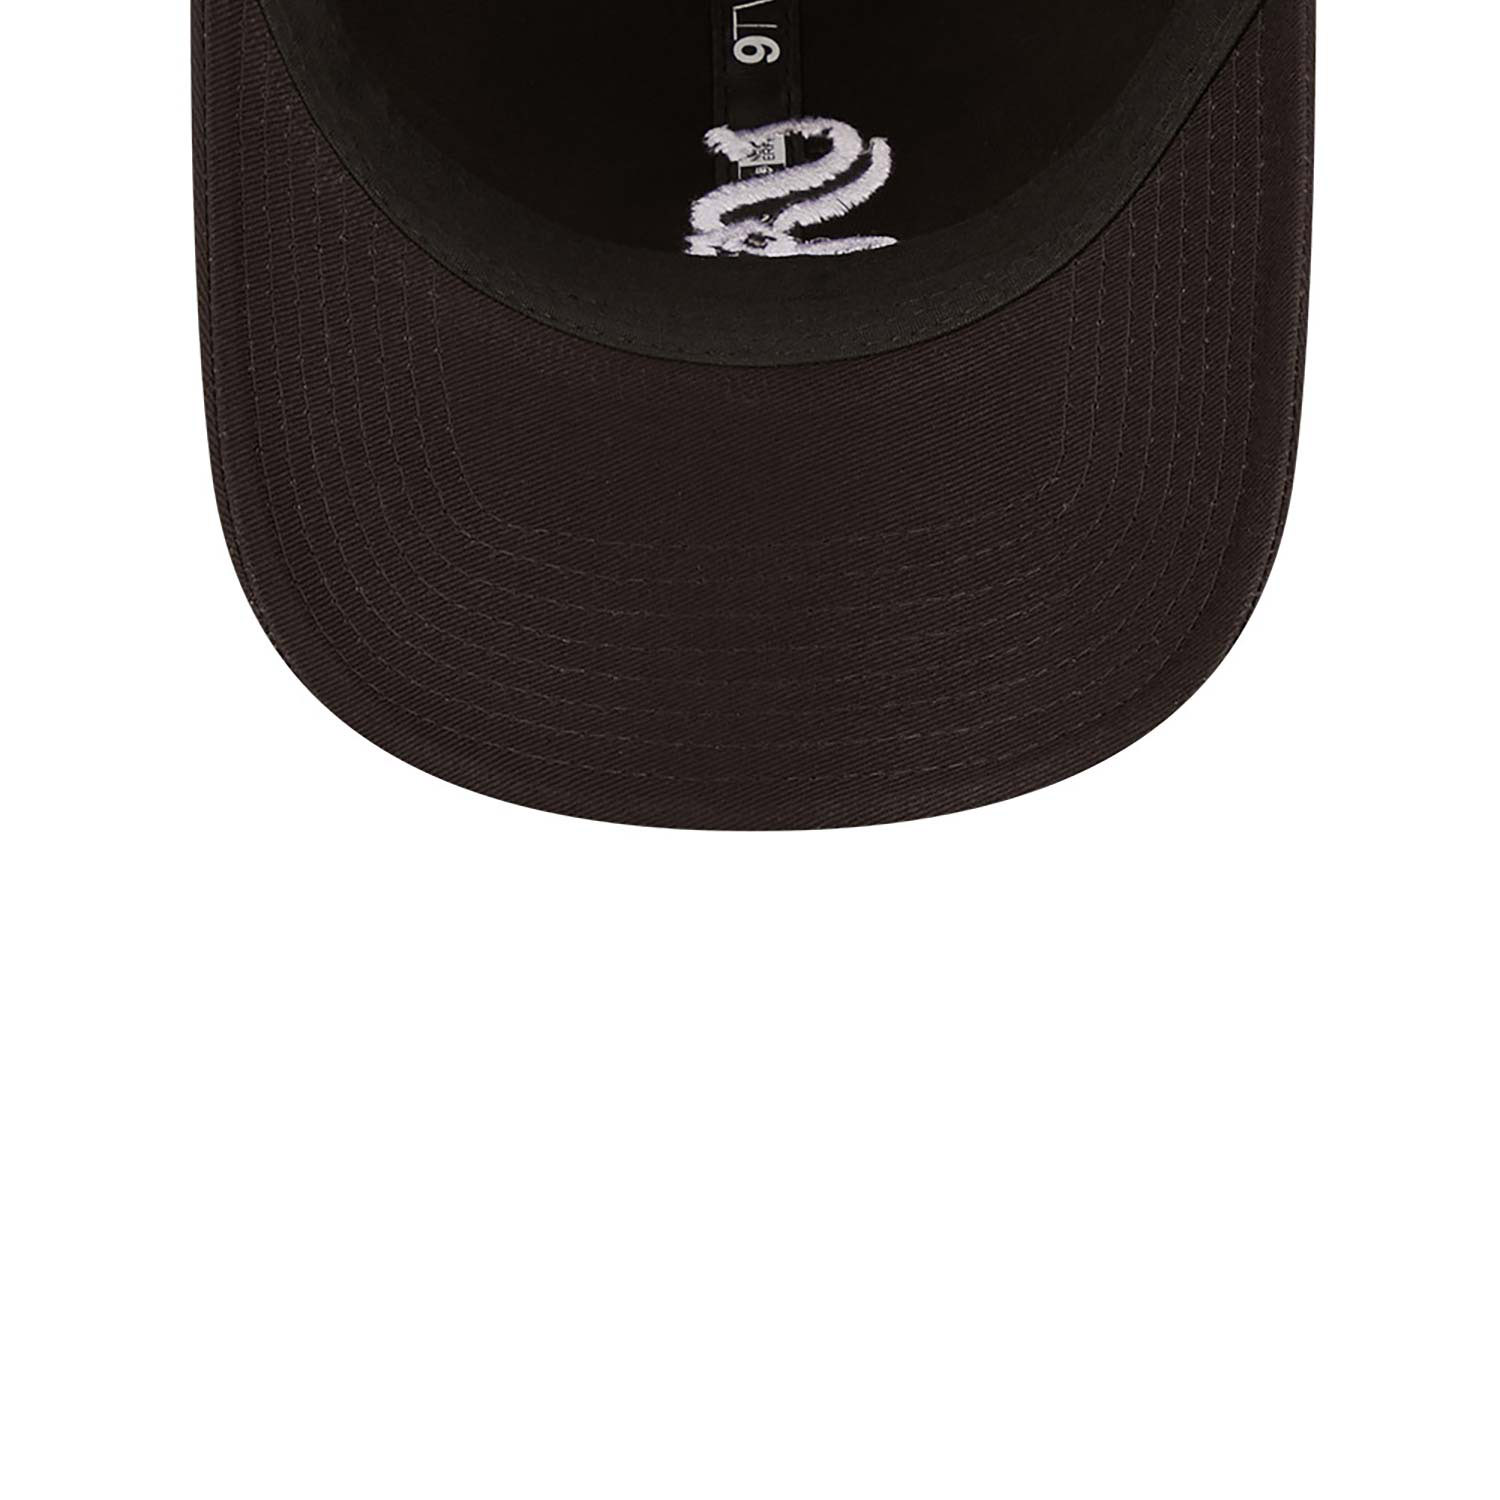 Chicago White Sox League Essential Black 9TWENTY Adjustable Cap